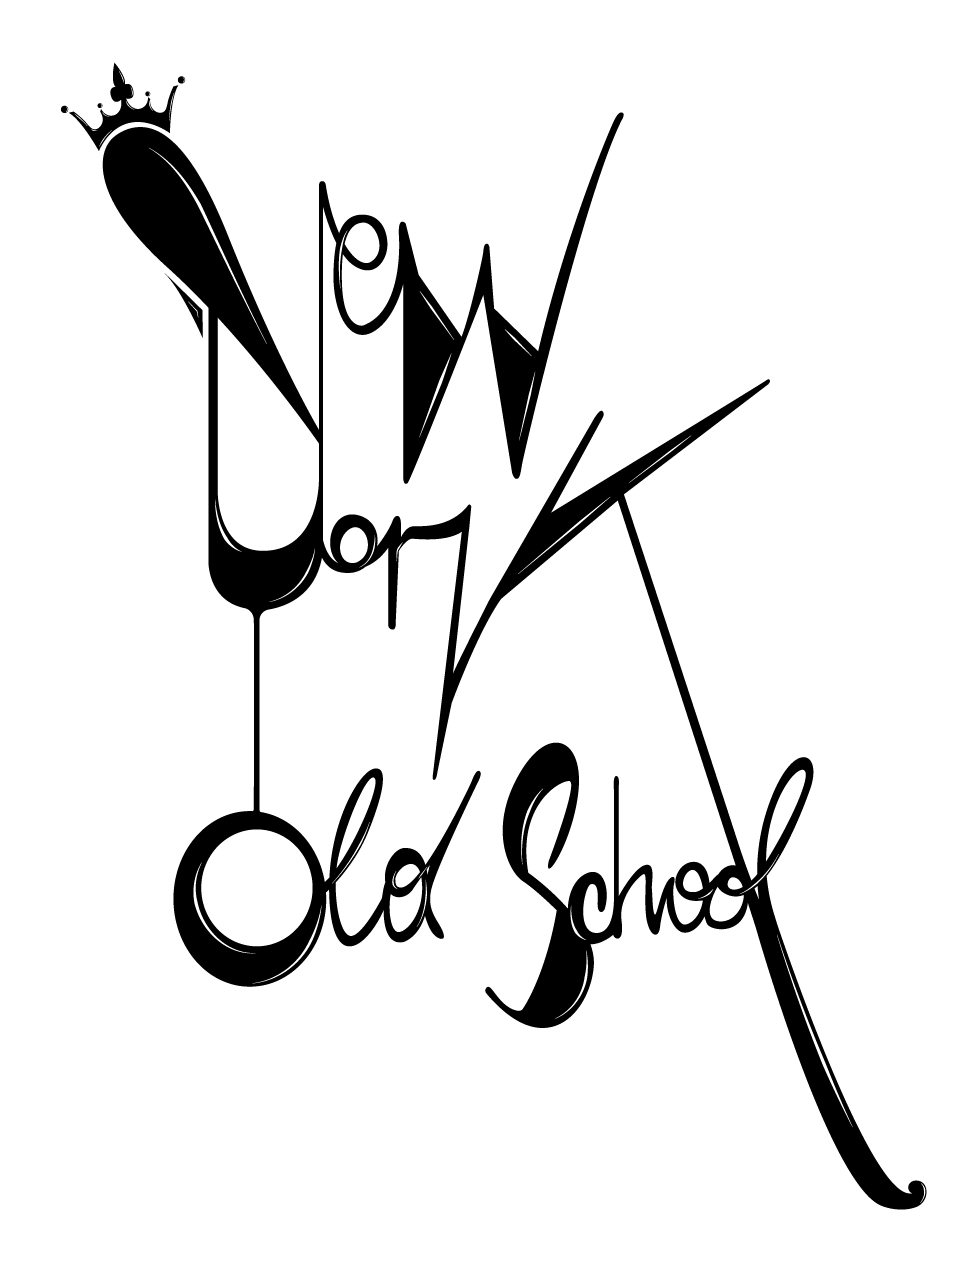 klajdi robo New York typographic graffiti tag black White hand sketch city illustrations